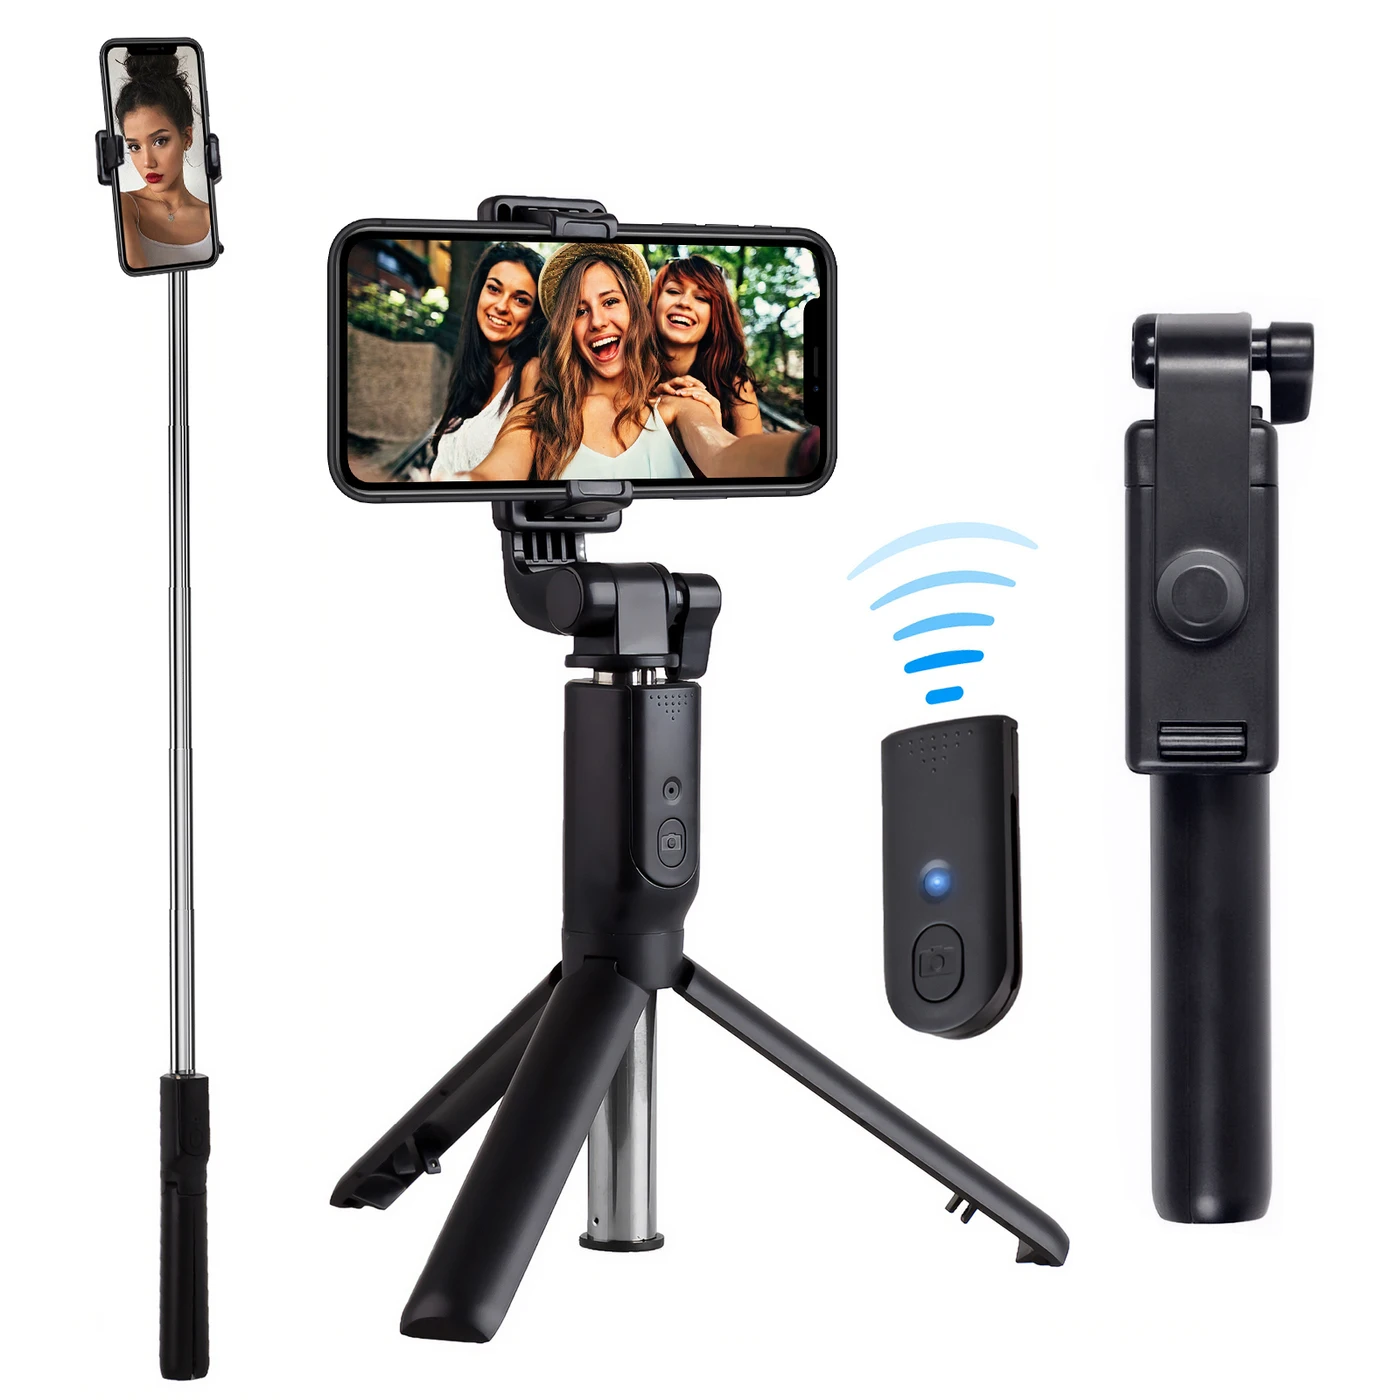 

Монопод для селфи Goodly Selfie Stick R6 со встроенным штативом триподом, регул